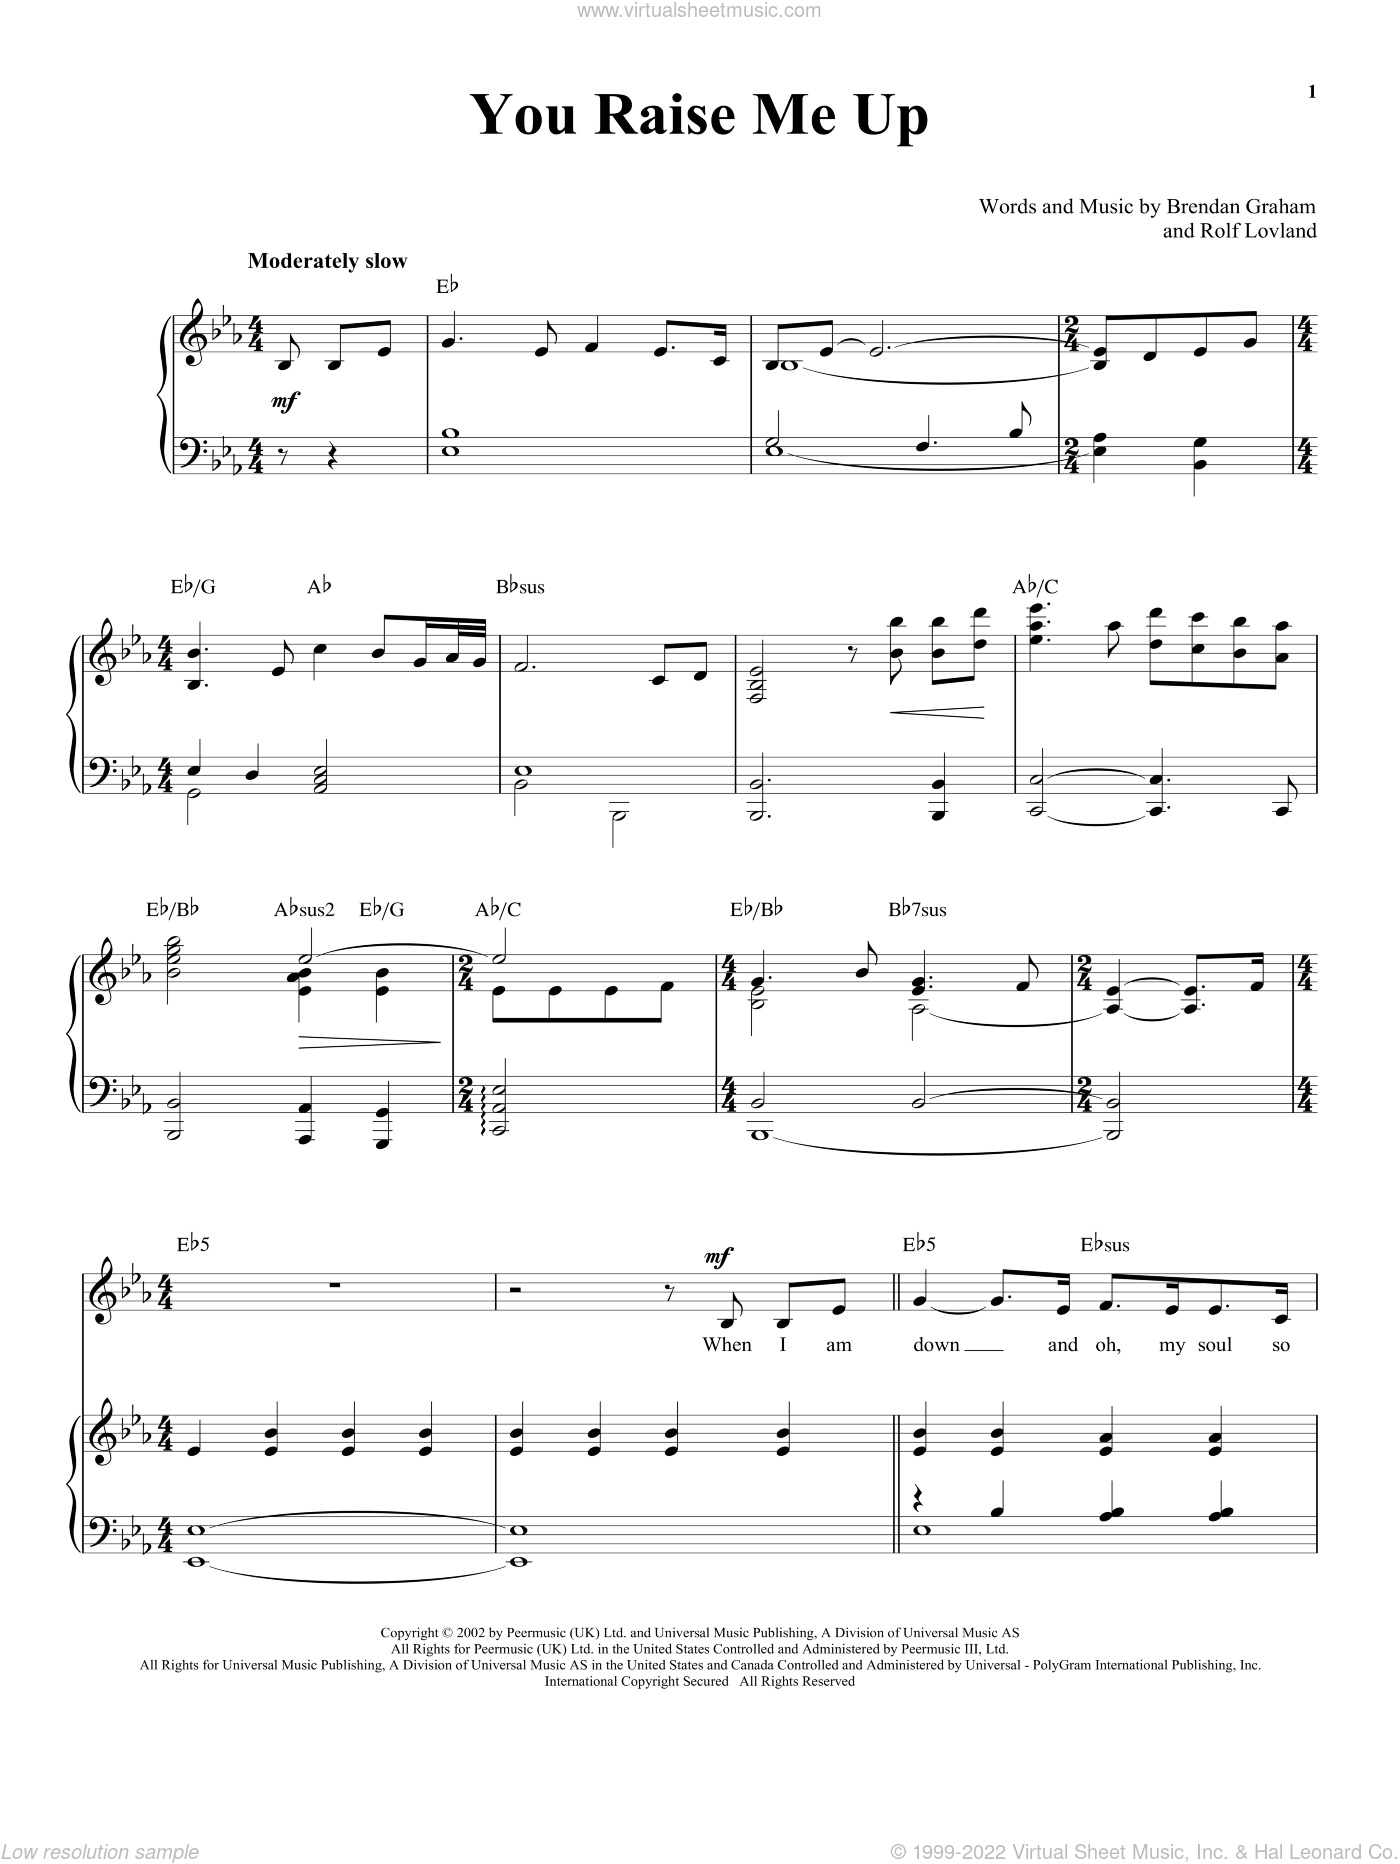 josh-groban-you-raise-me-up-sheet-music-notes-chords-download